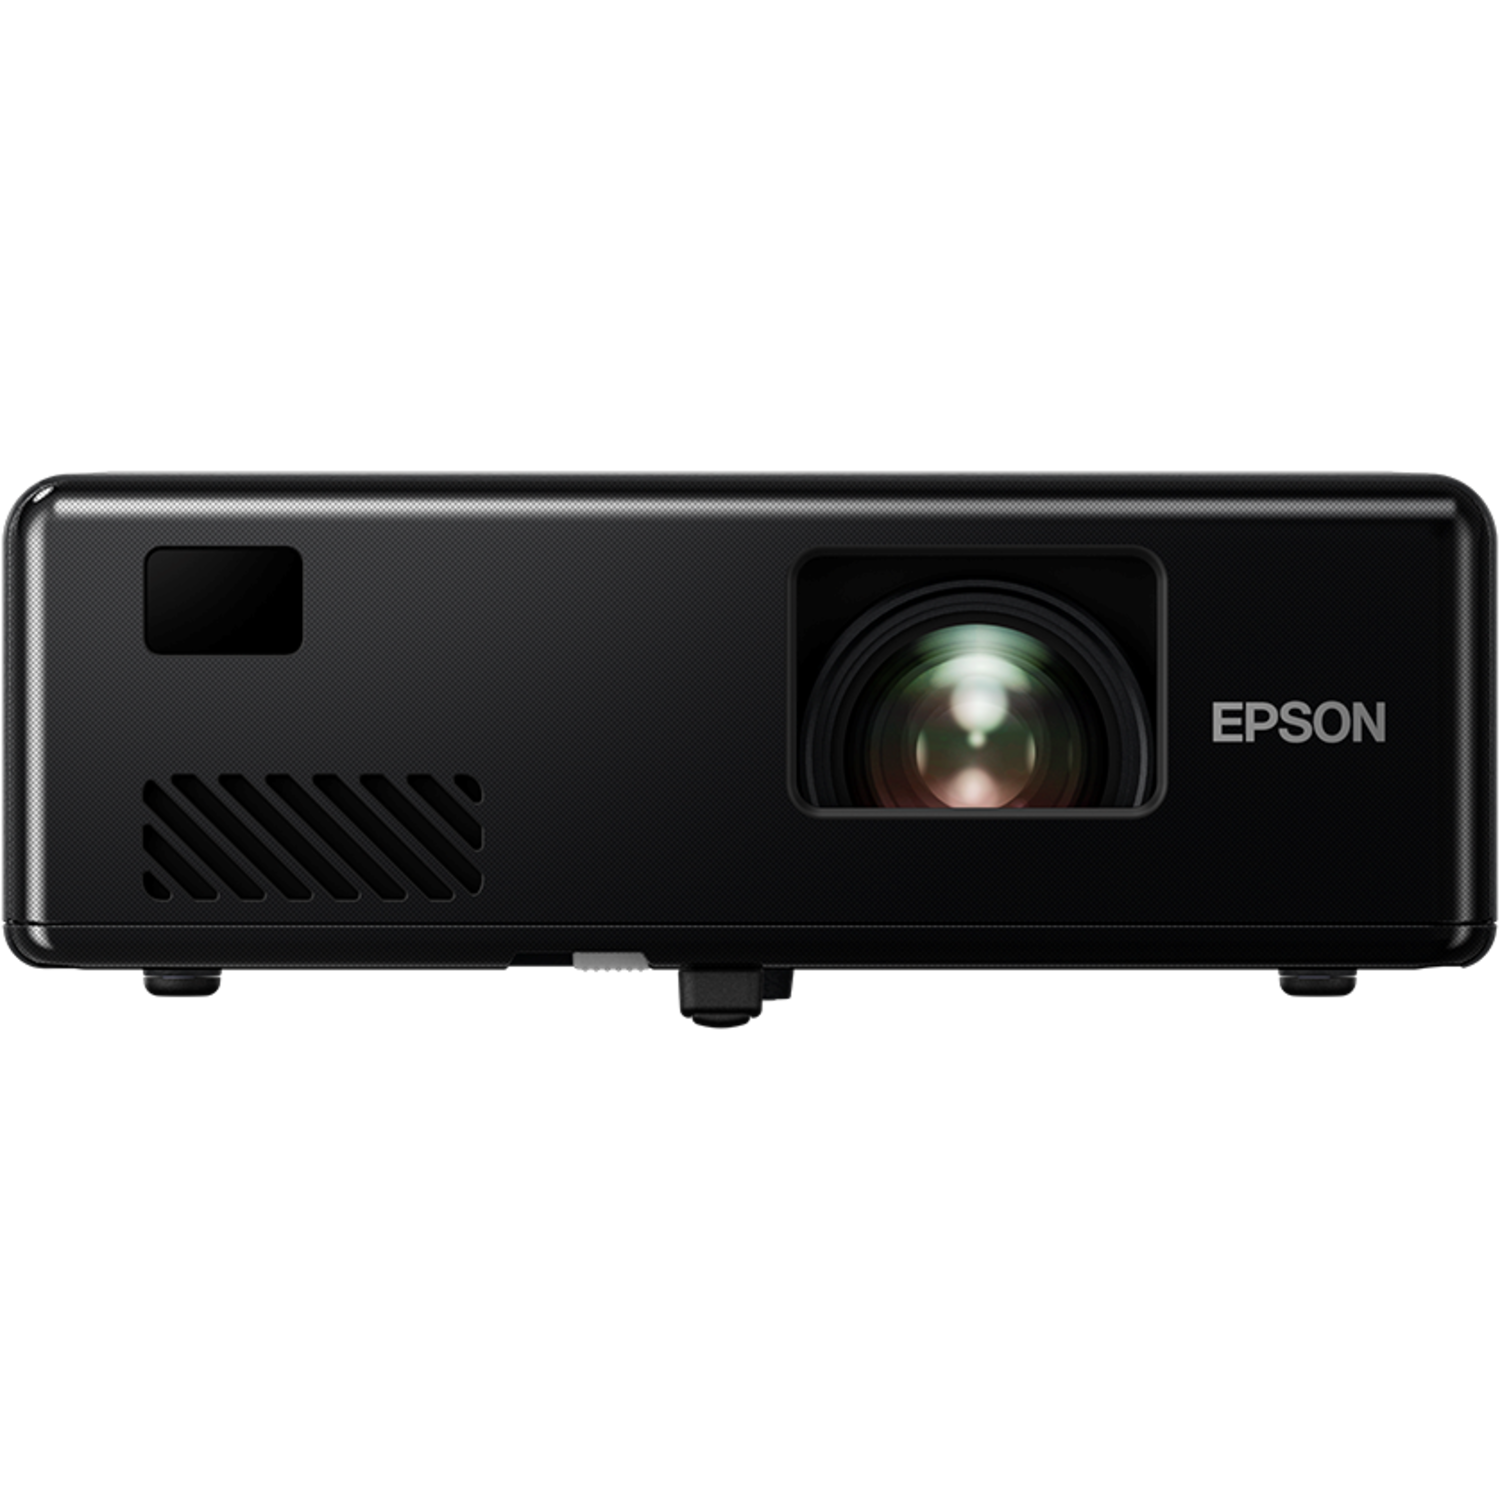 Epson EF-11 Mini Laser Projector met Miracast Smart Mini beamer - Beamer-winkel.nl - Beamer Kopen